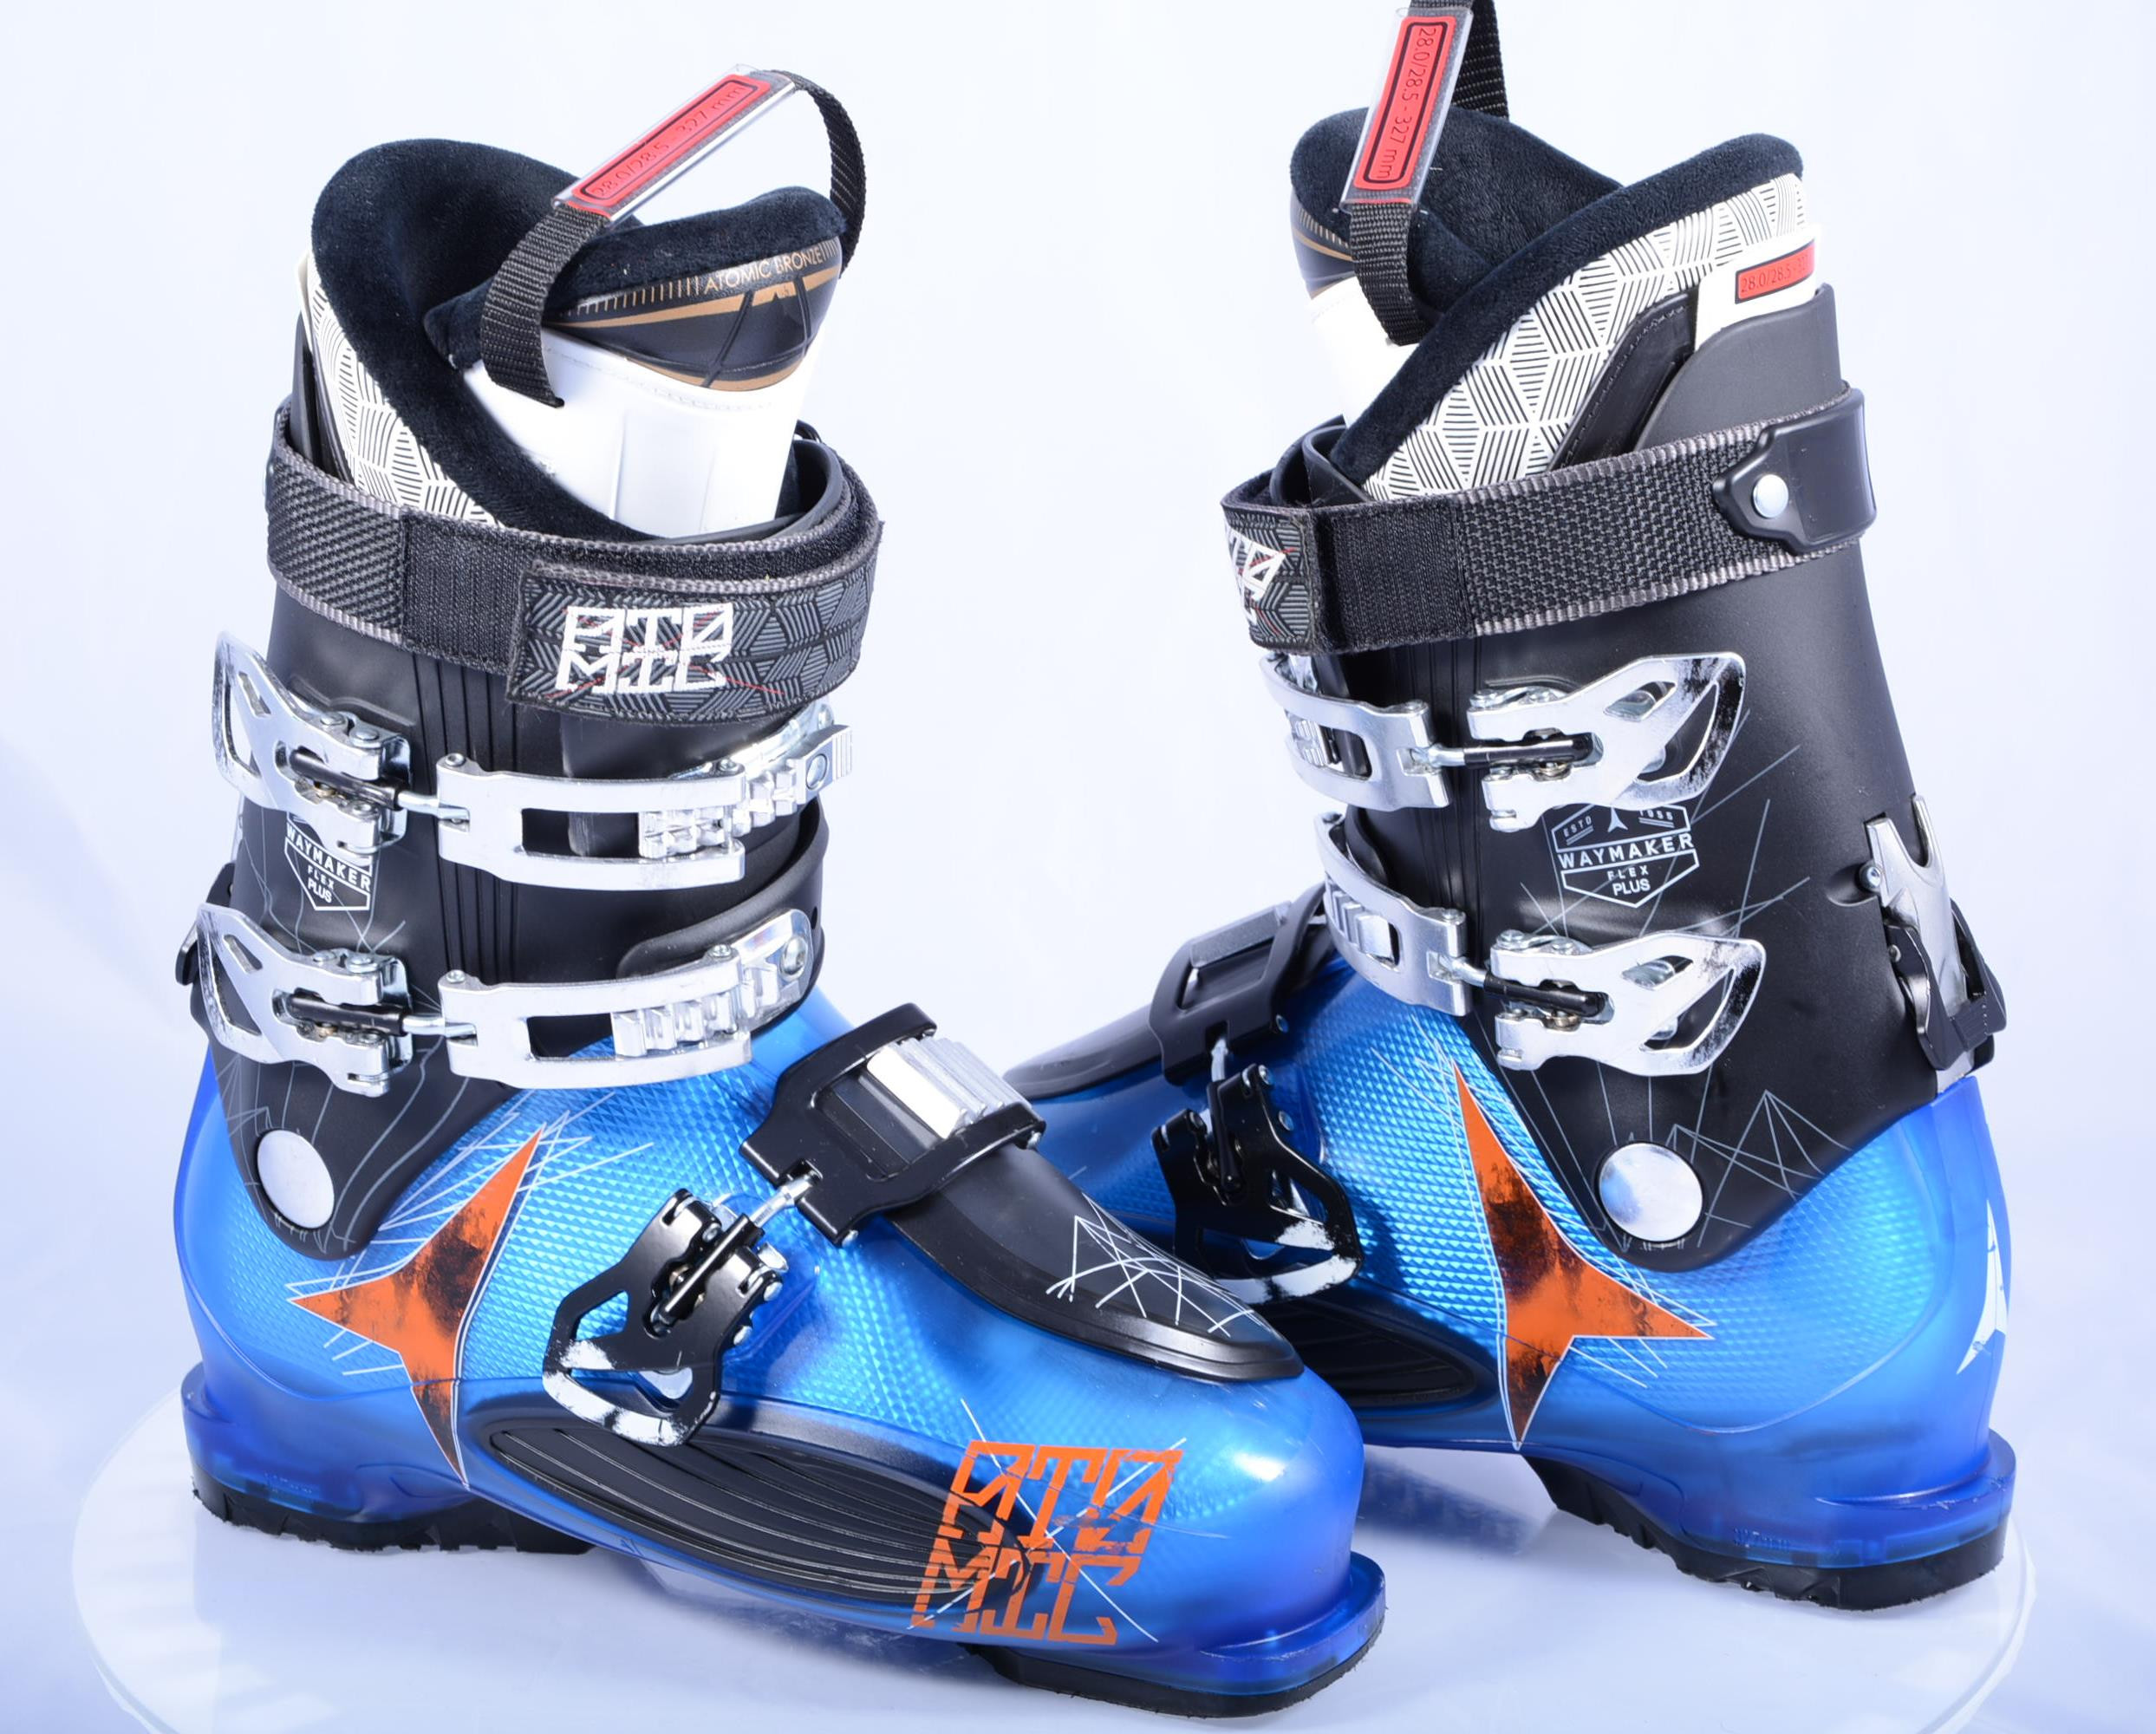 287 mm ski boot size